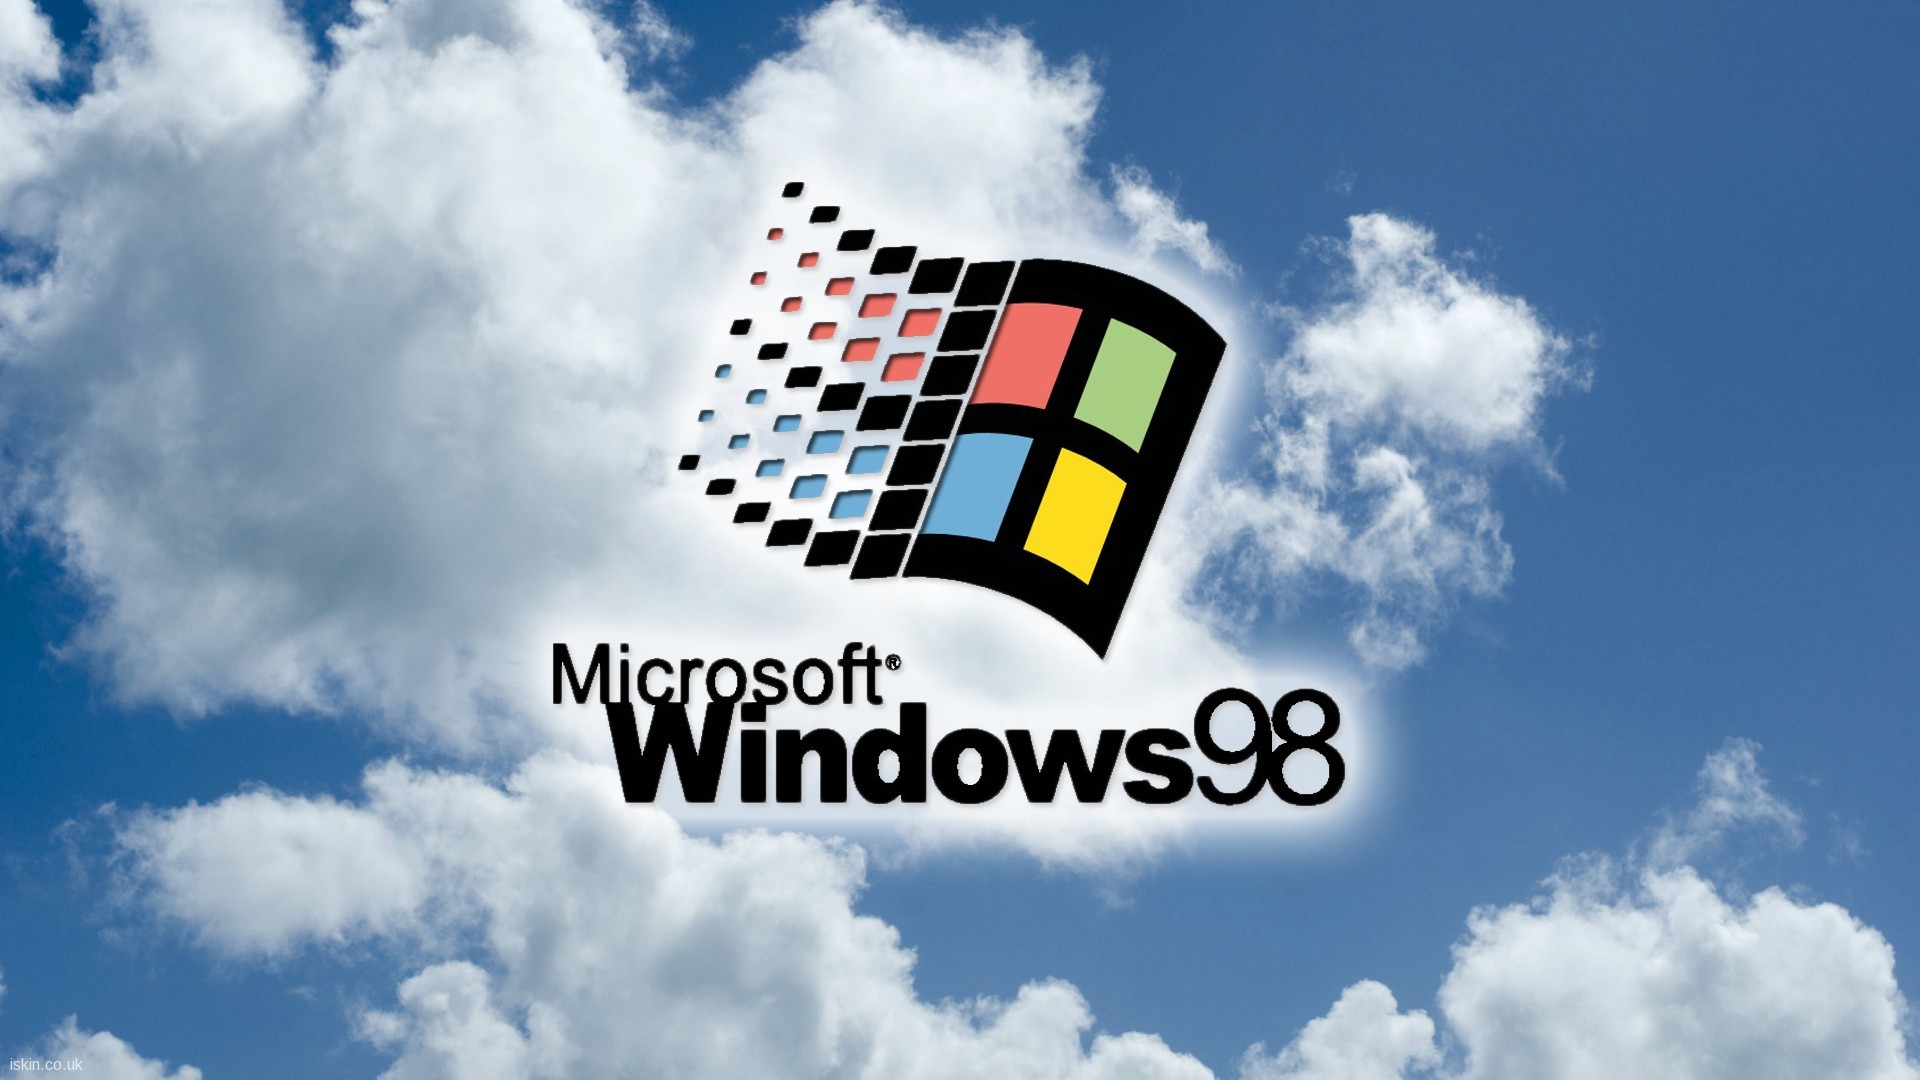 1920x1080 Windows 98 Logo wallpaper - 626438